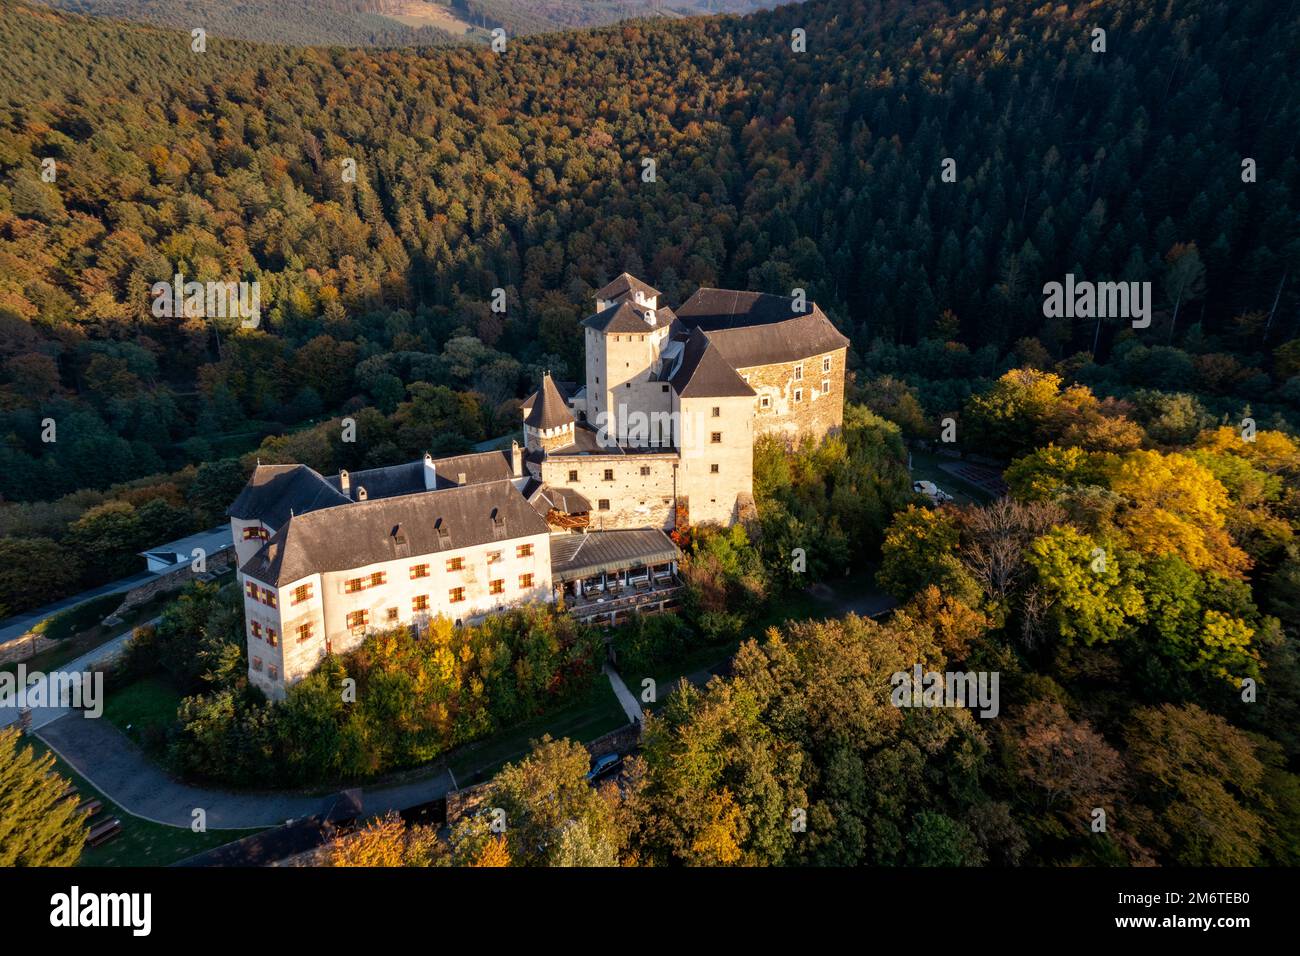 View of the Burg Lockenhaus Castle in the Burgenland region of Austria Stock Photo